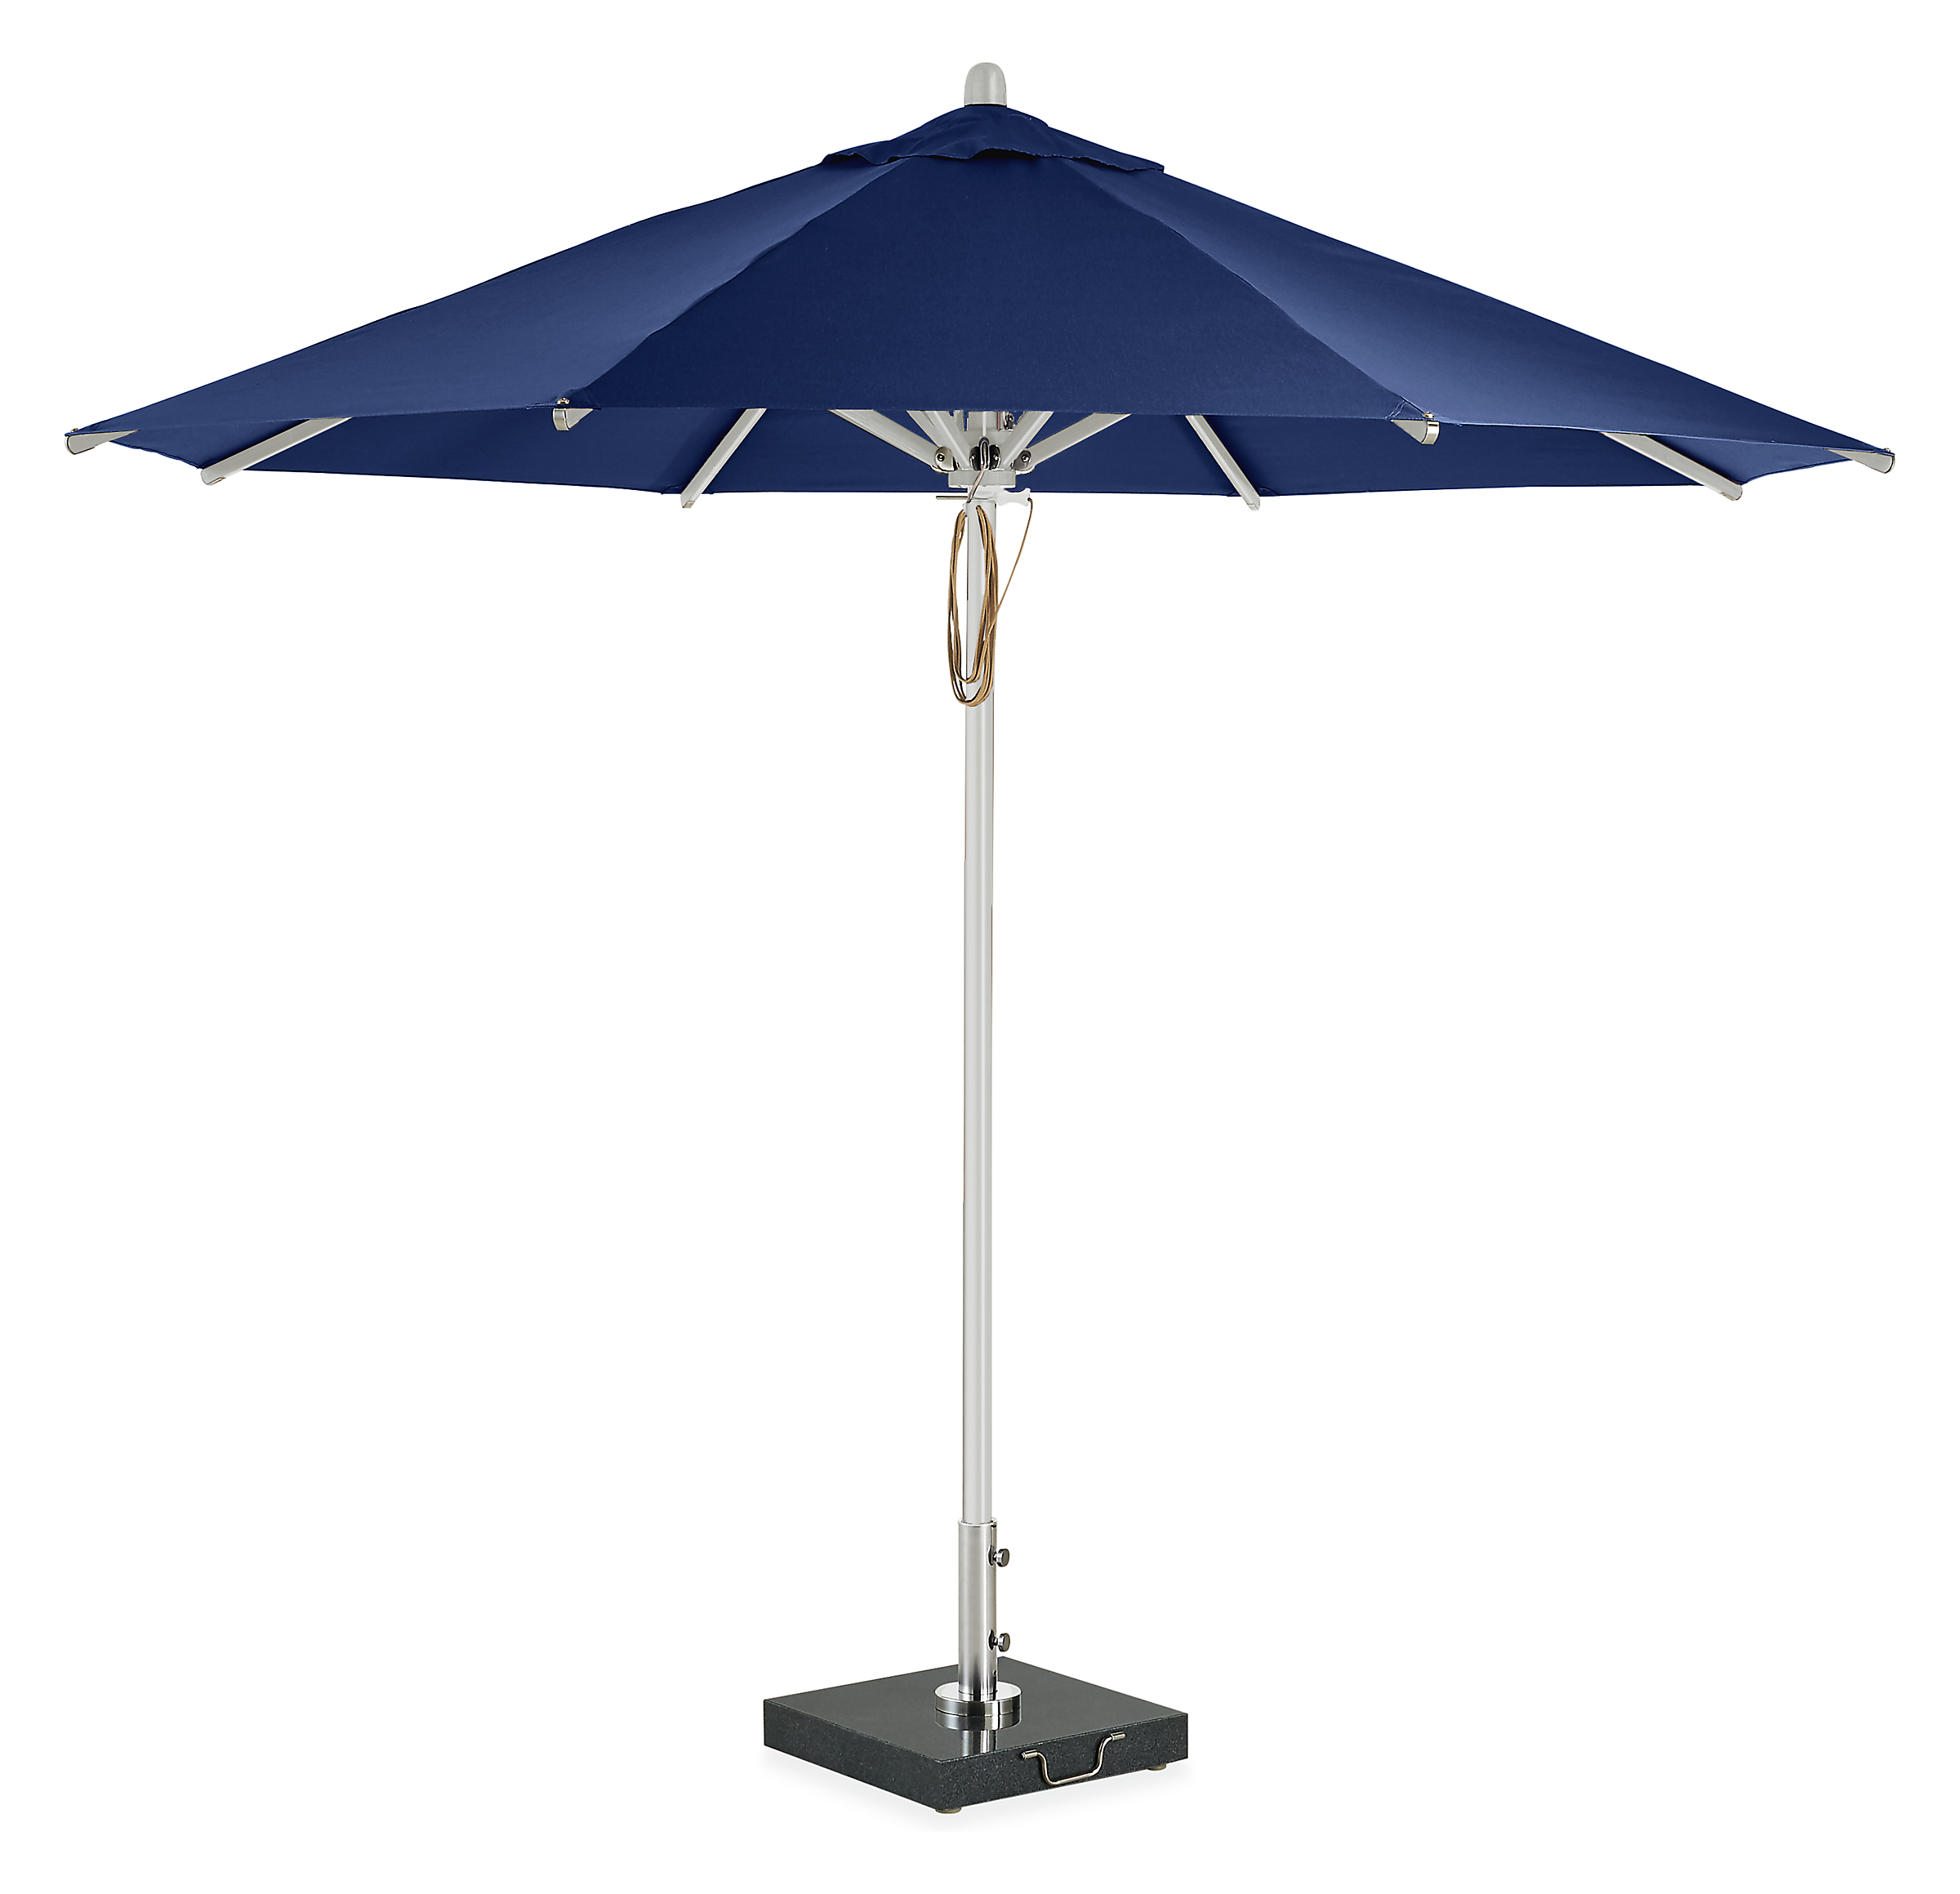 Cirro 10' Patio Umbrella in Navy with Aluminum Pole